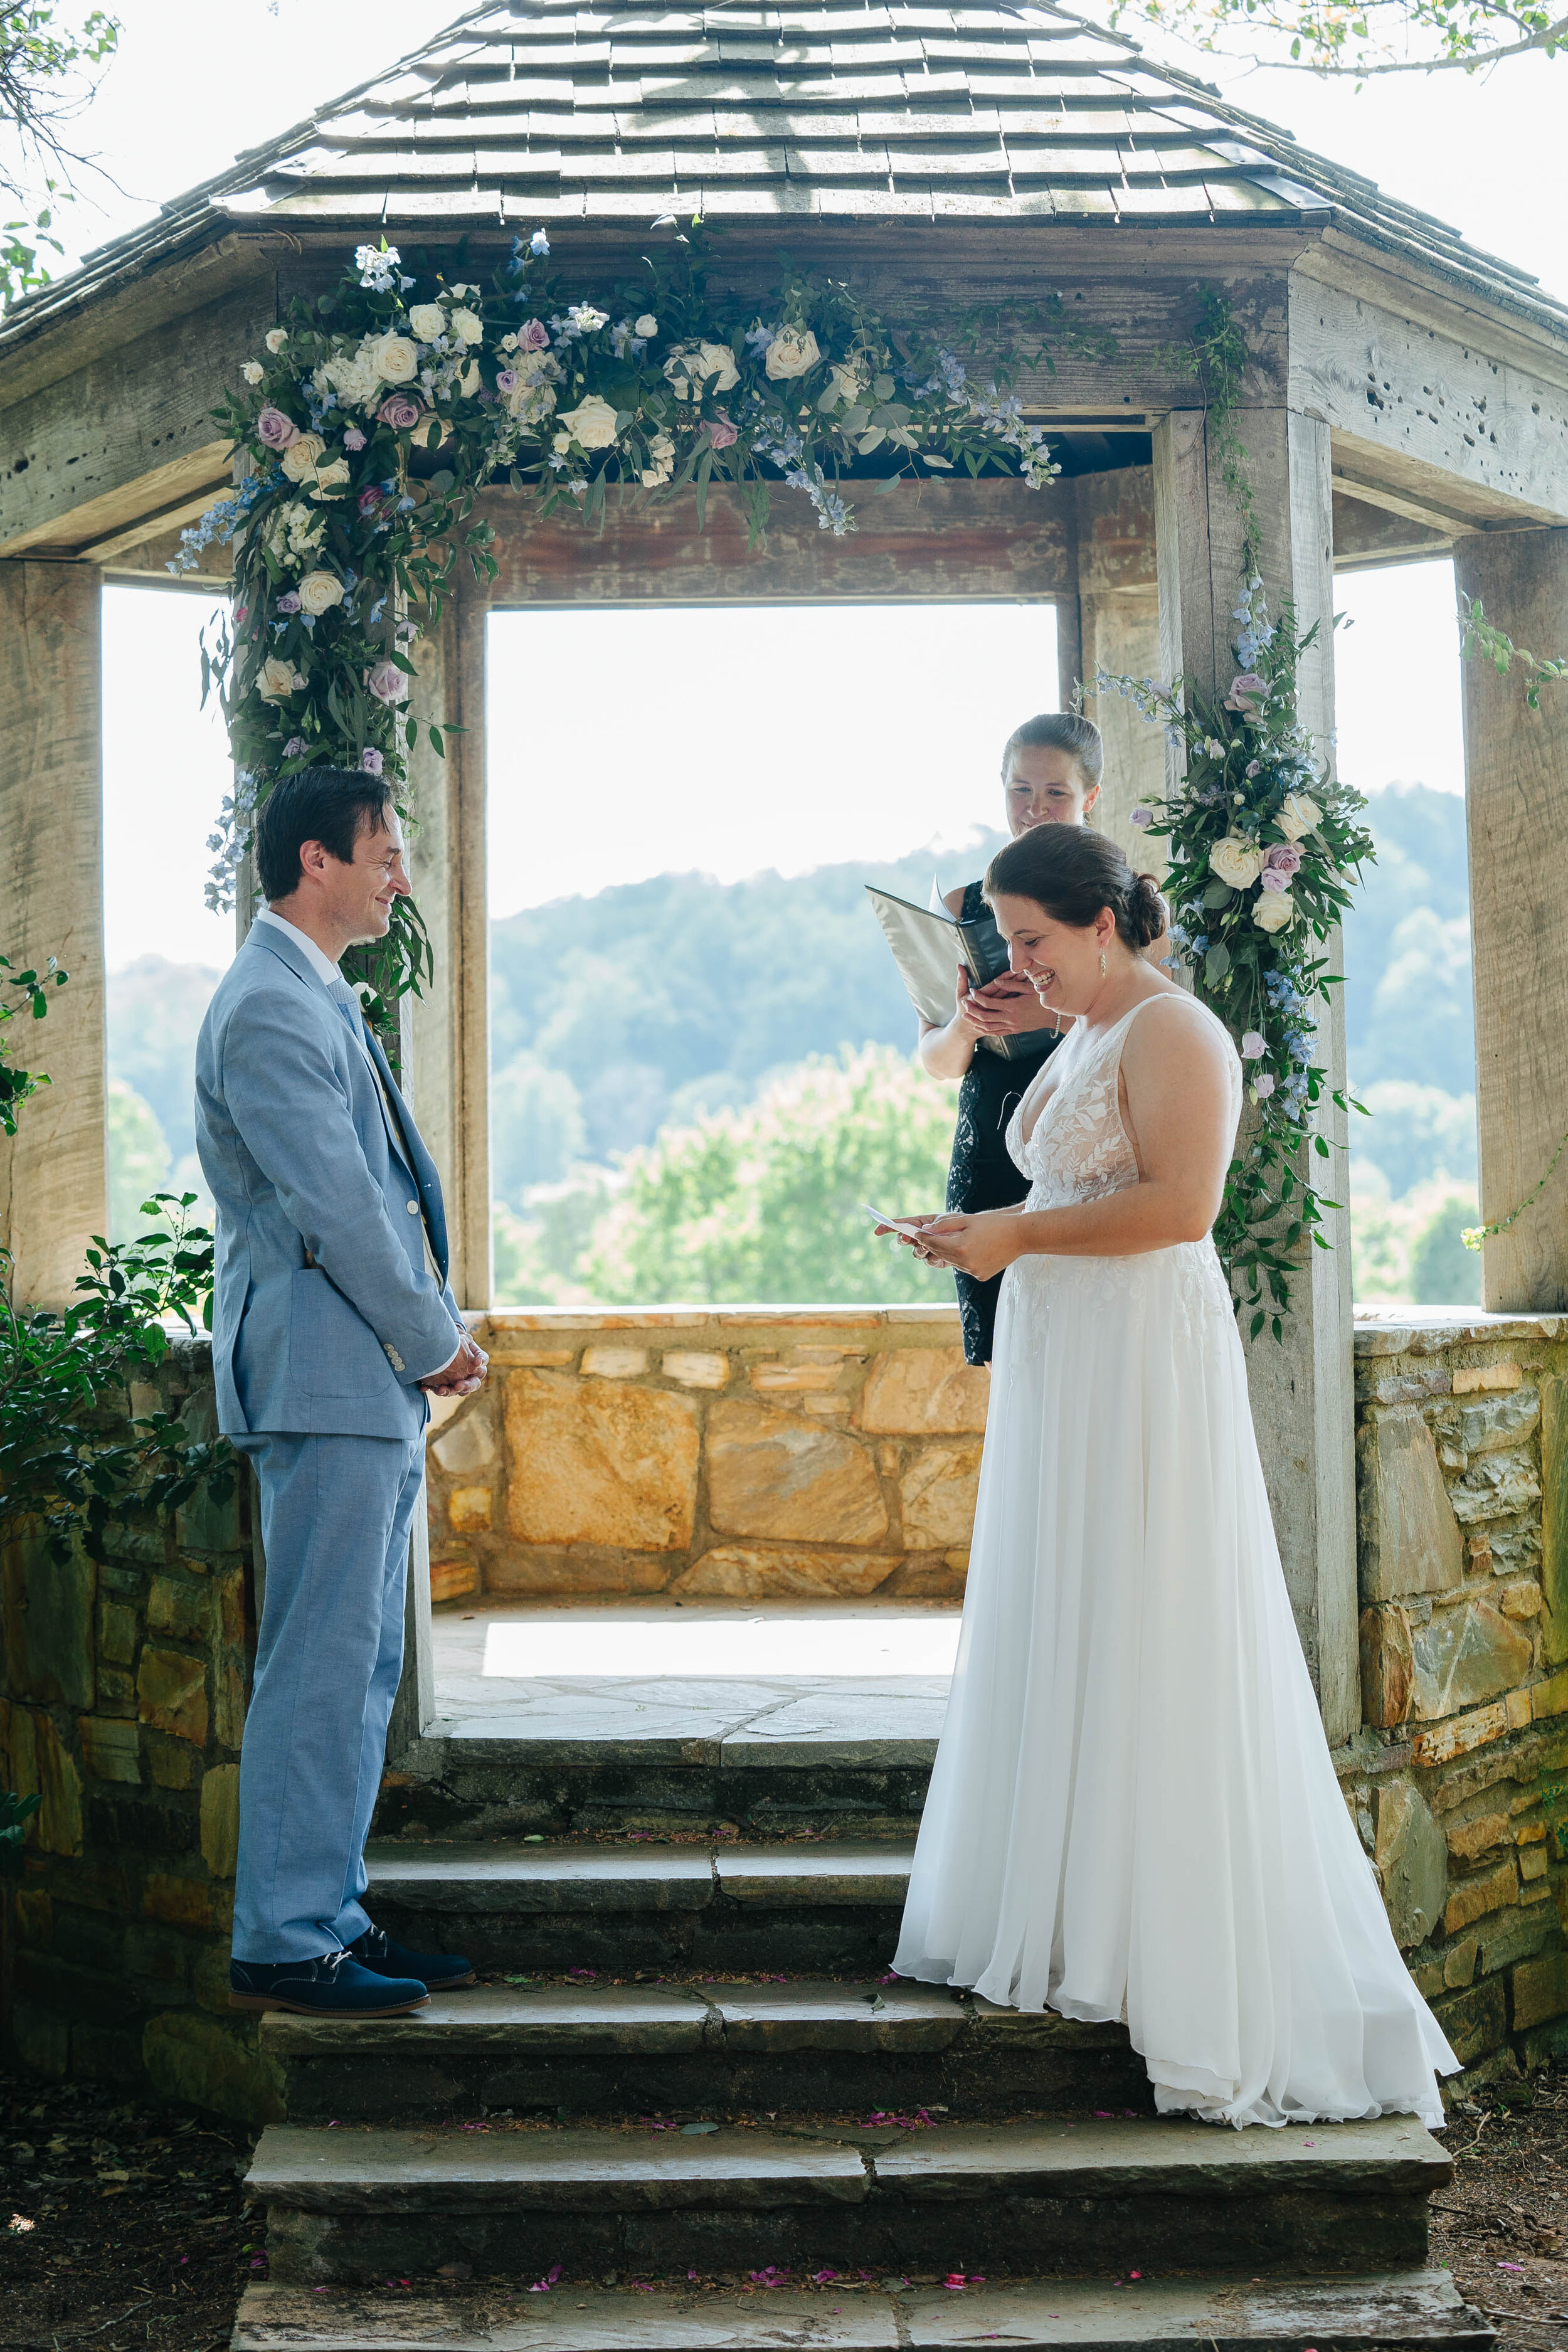 Intimate-Wedding-Photography-Little-Oatlands-Virginia-Love-Life-Images- 0011.JPG